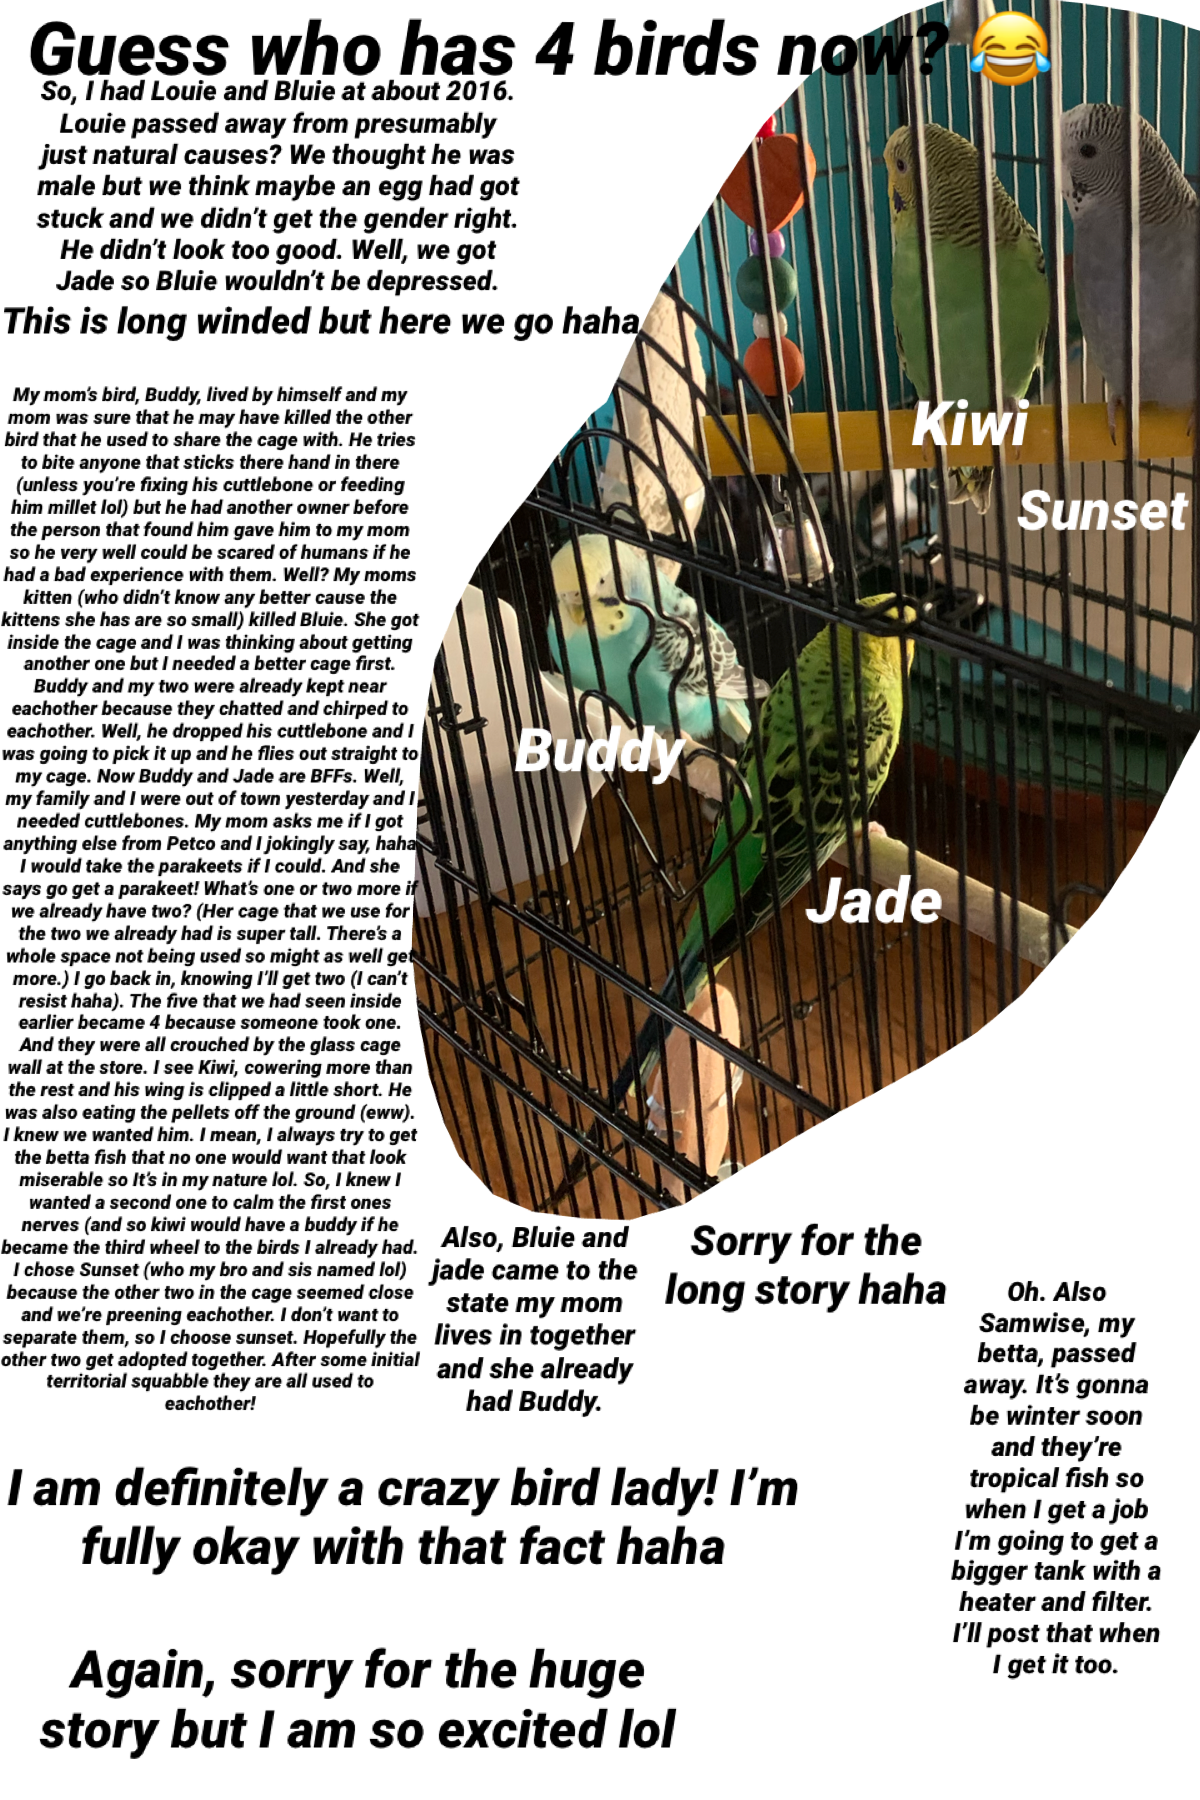 A bird story! Lol